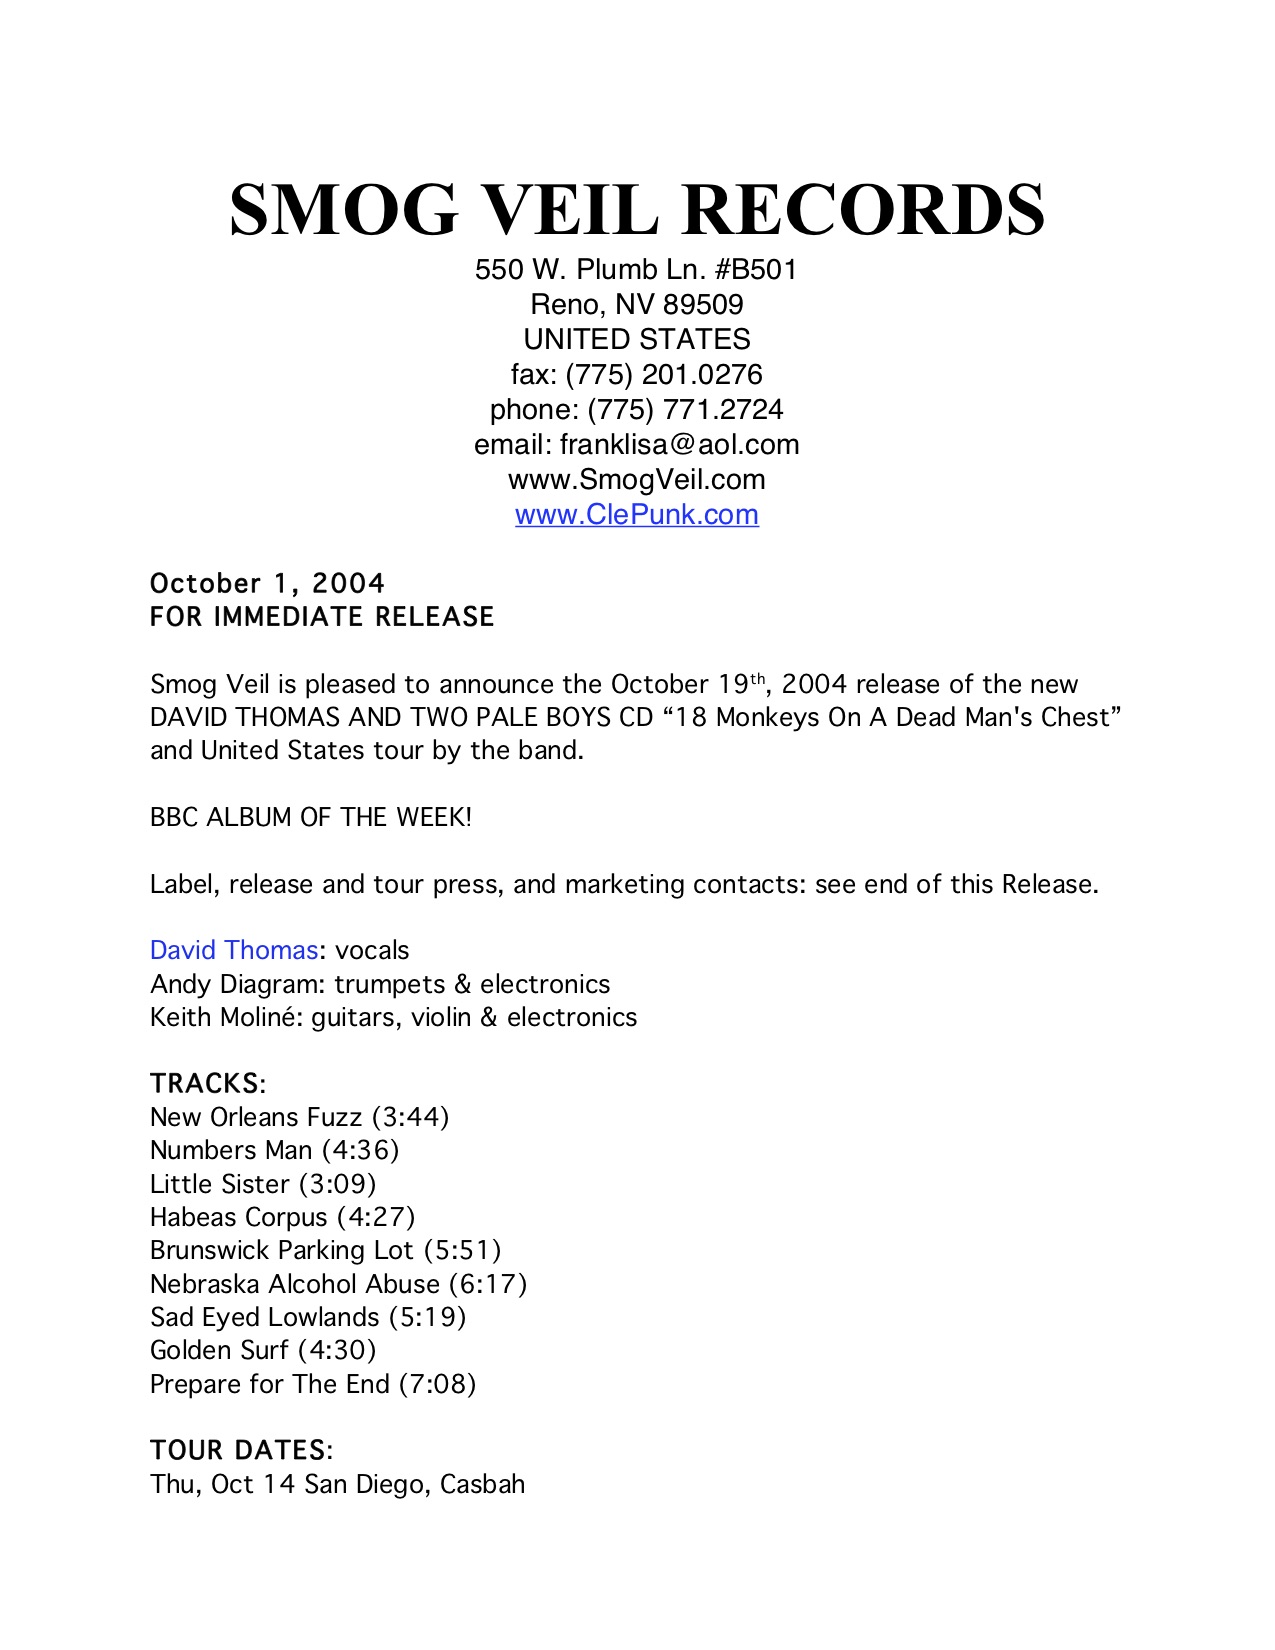 Dossier de presse Smog Veil 18 Monkeys